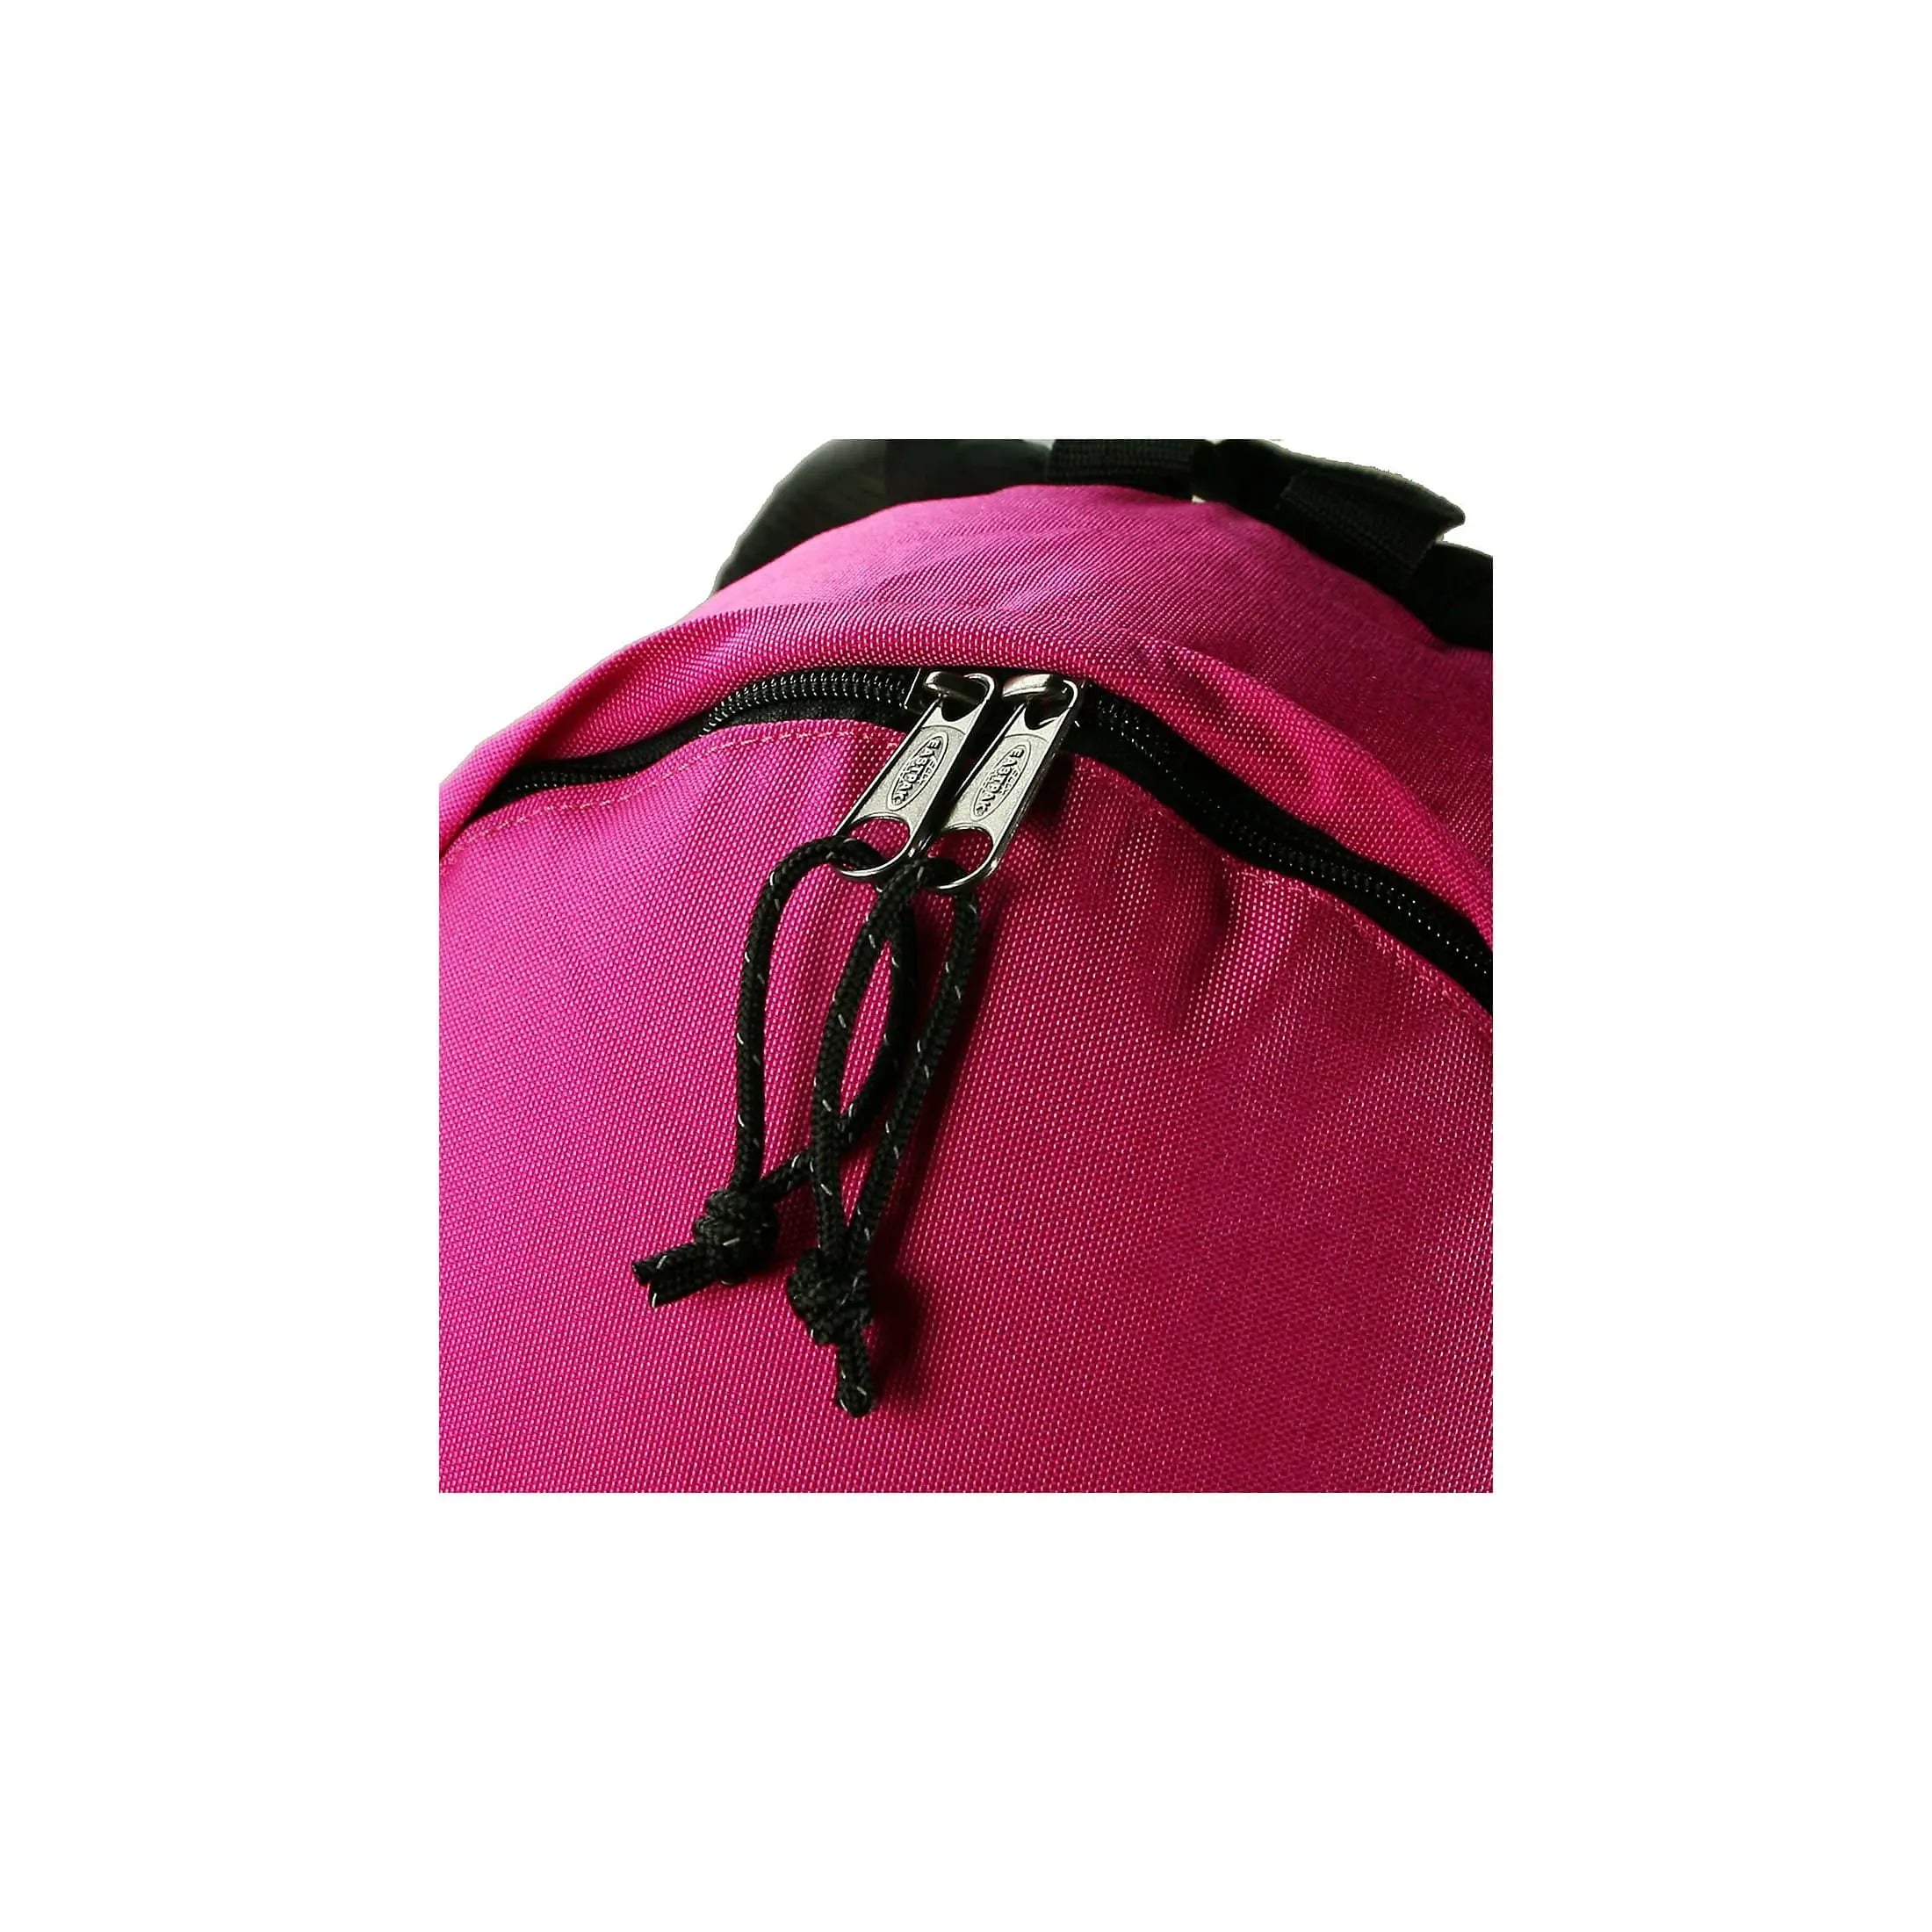 Eastpak Authentic Orbit leisure backpack 33 cm - triple denim